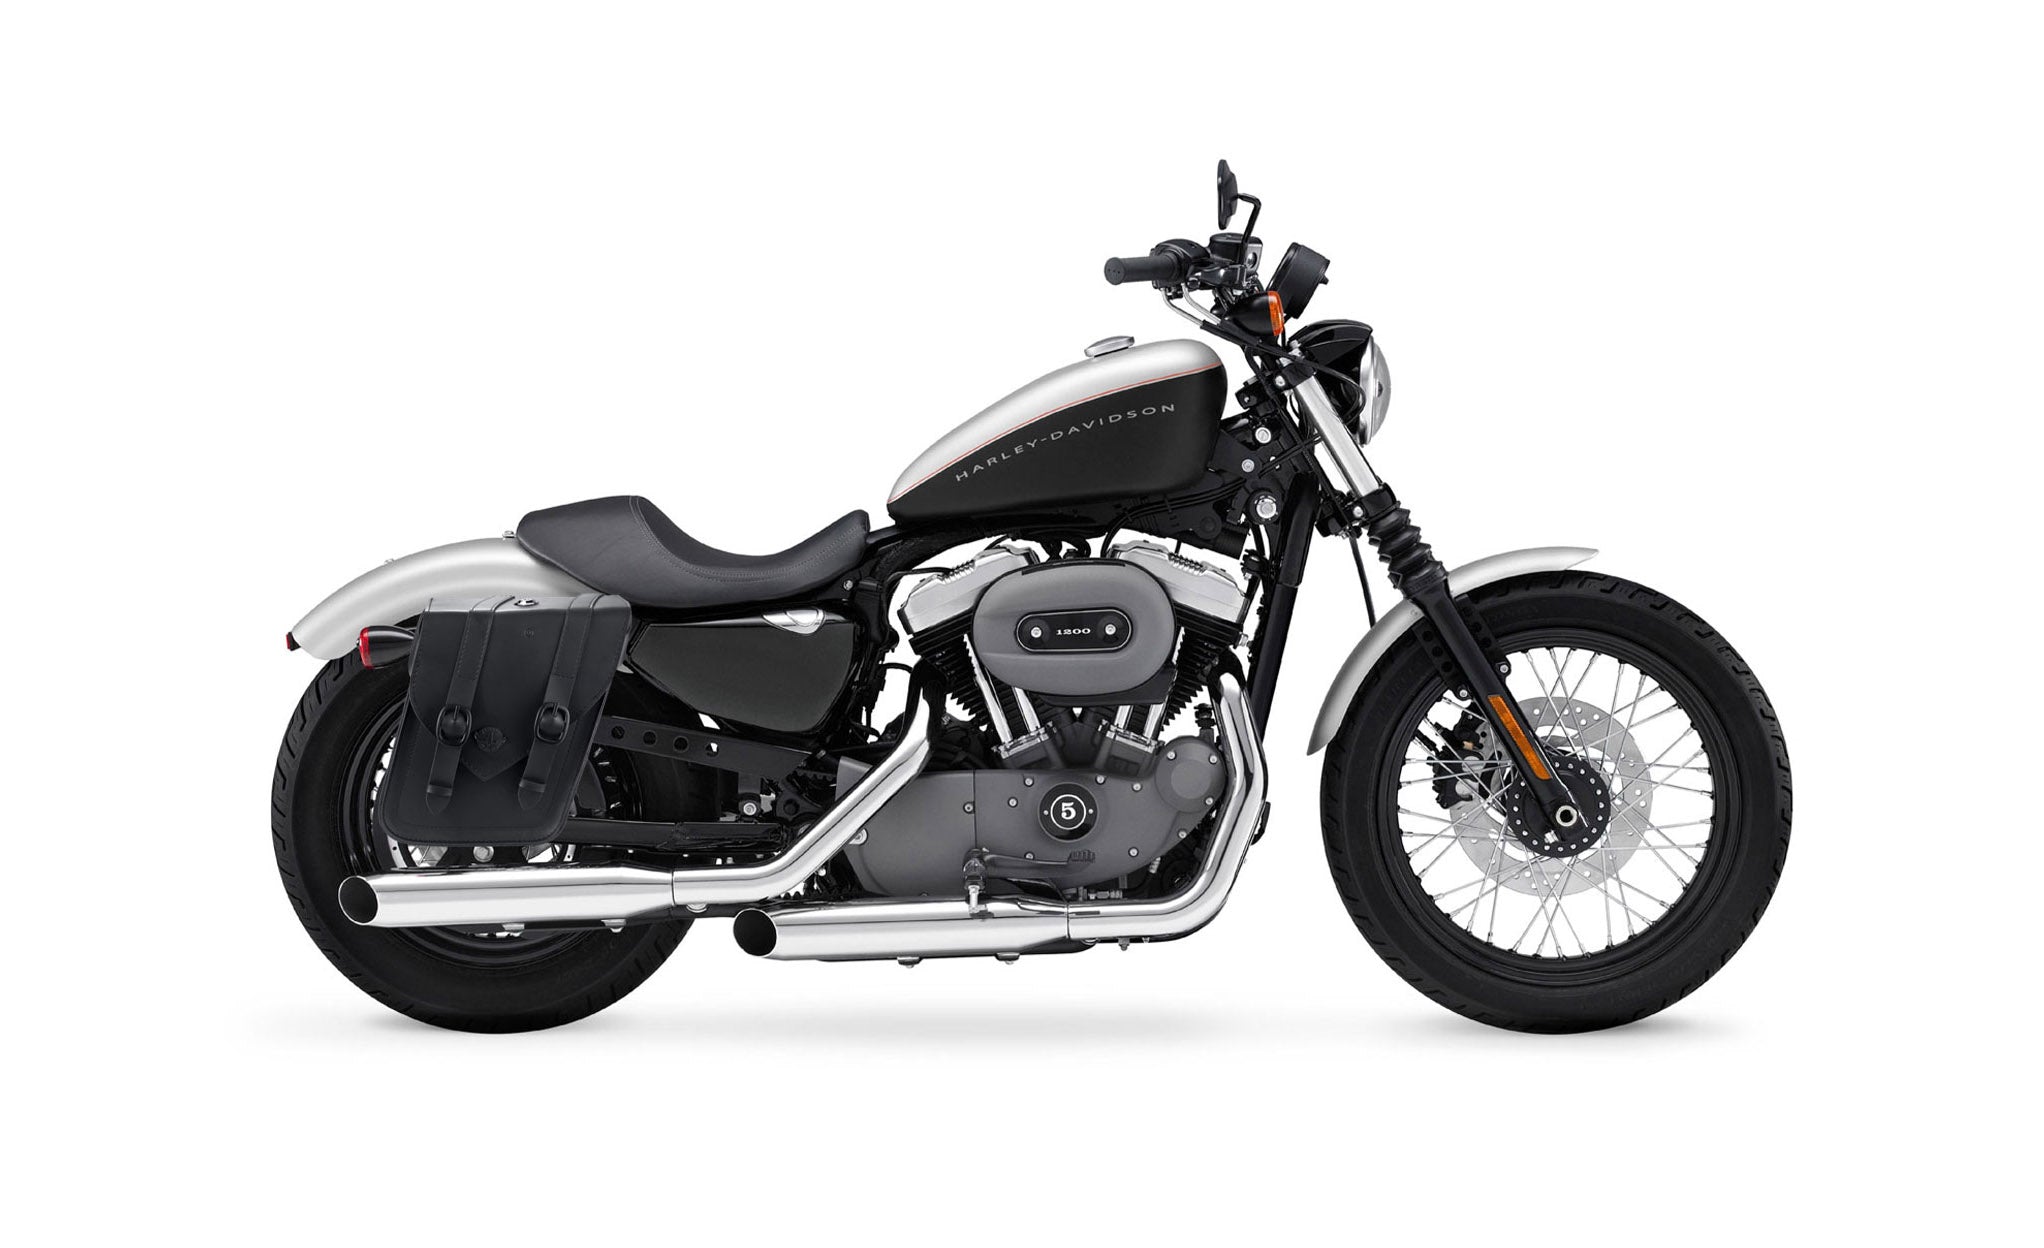 Viking Dark Age Medium Leather Motorcycle Saddlebags For Harley Sportster 1200 Nightster Xl1200N on Bike Photo @expand